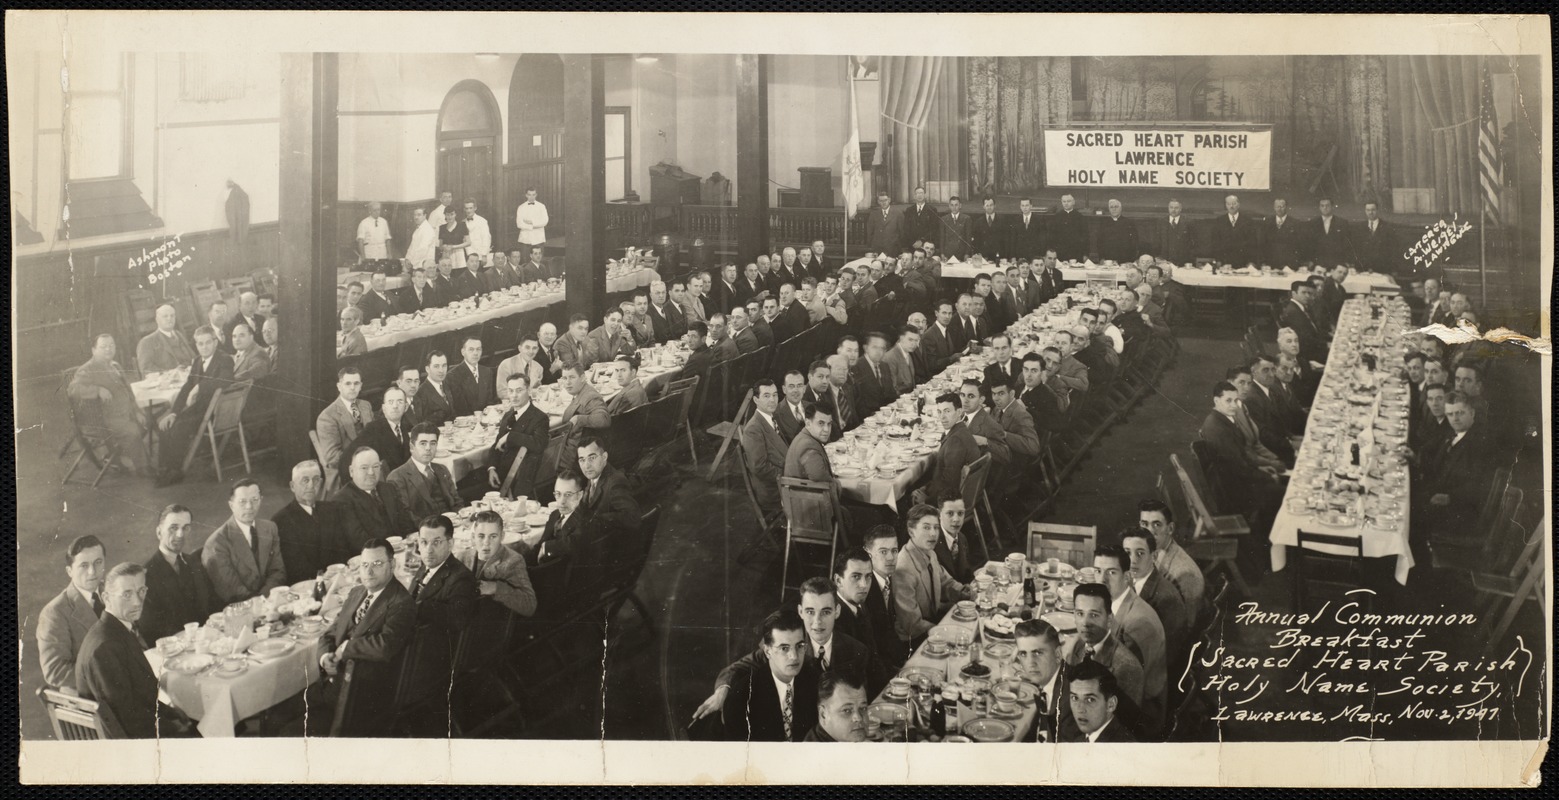 Annual communion breakfast, Sacred Heart parish, Holy Name Society, Lawrence, Massachusetts. November 2, 1947